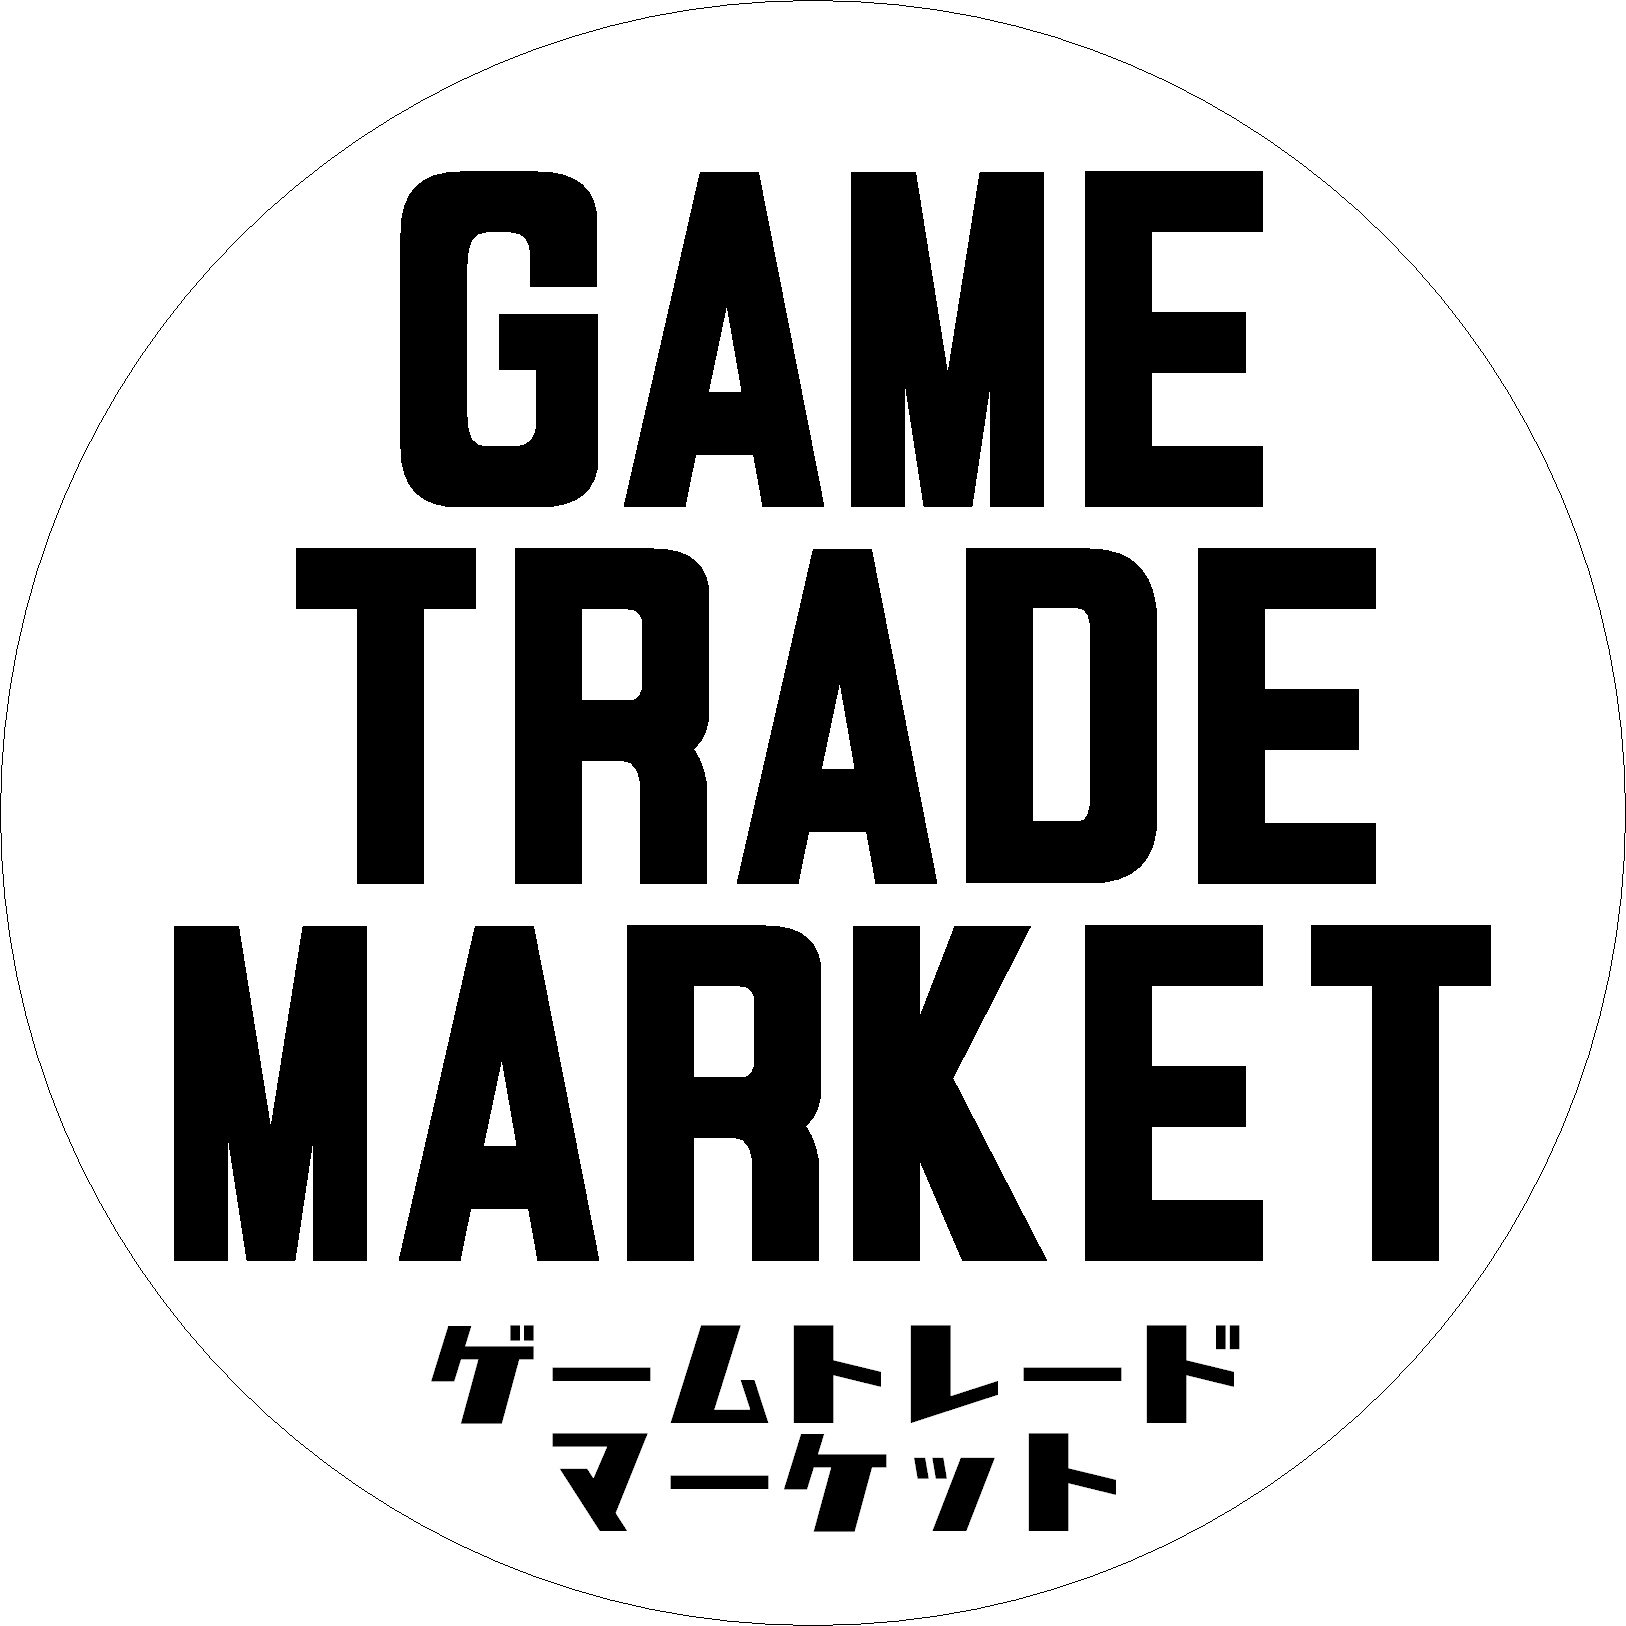 TVゲーム系専門フリーマーケット #GameTradeMarket の専用アカウントです。イベント詳細や出品物の情報を告知します。代表 @sekero セケロが管理しております。
3/28 #すーぱーレトロEXPO #ハンズ渋谷店 無事終了しました！次回告知をお楽しみに！